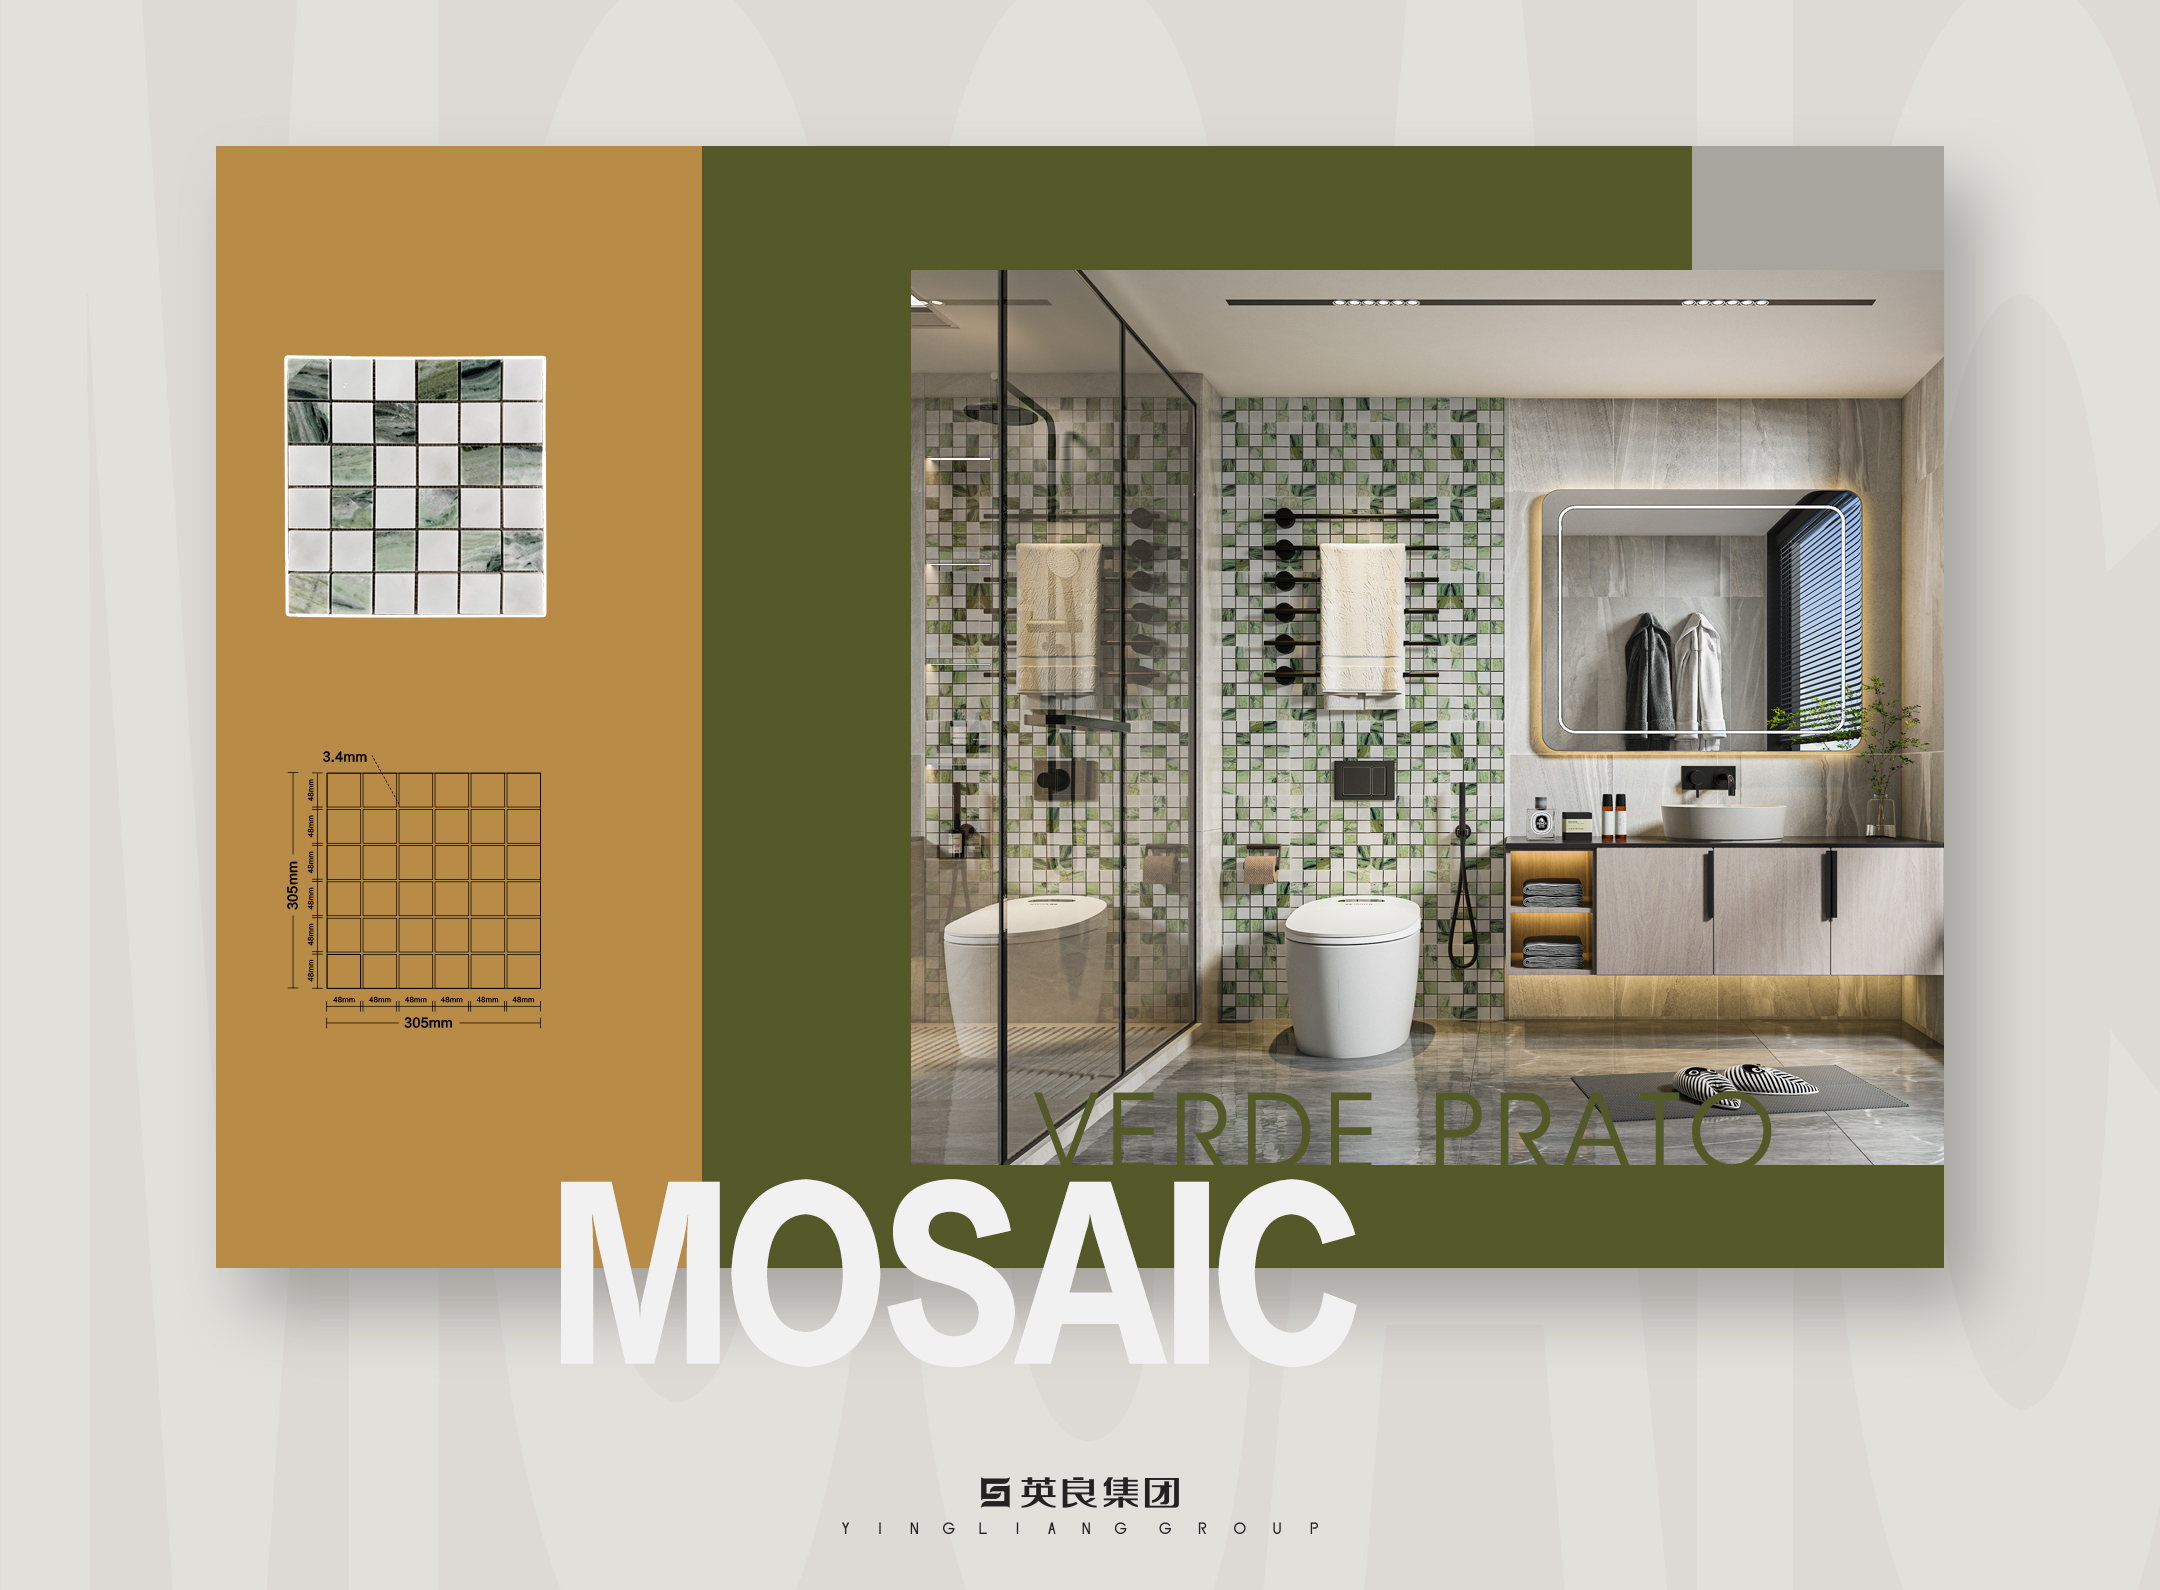 The Green Verde Prato Marble Mosaic